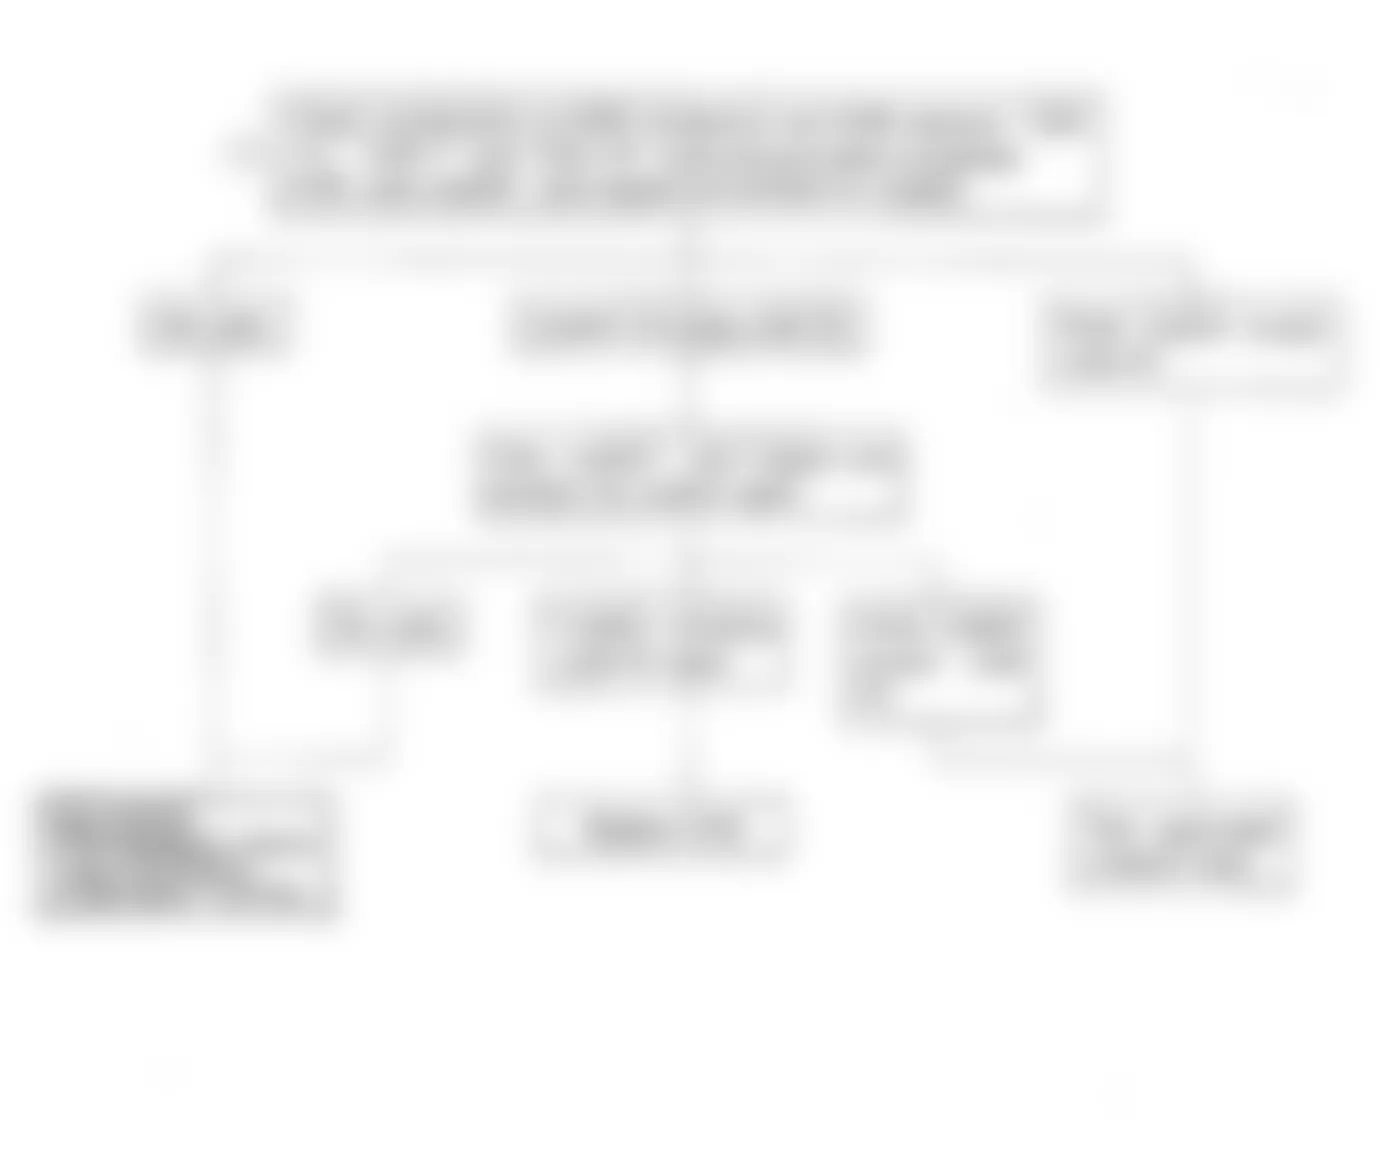 Isuzu Pickup 1 Ton 1992 - Component Locations -  Code No. 52 Flow Chart, Faulty ECM Ram